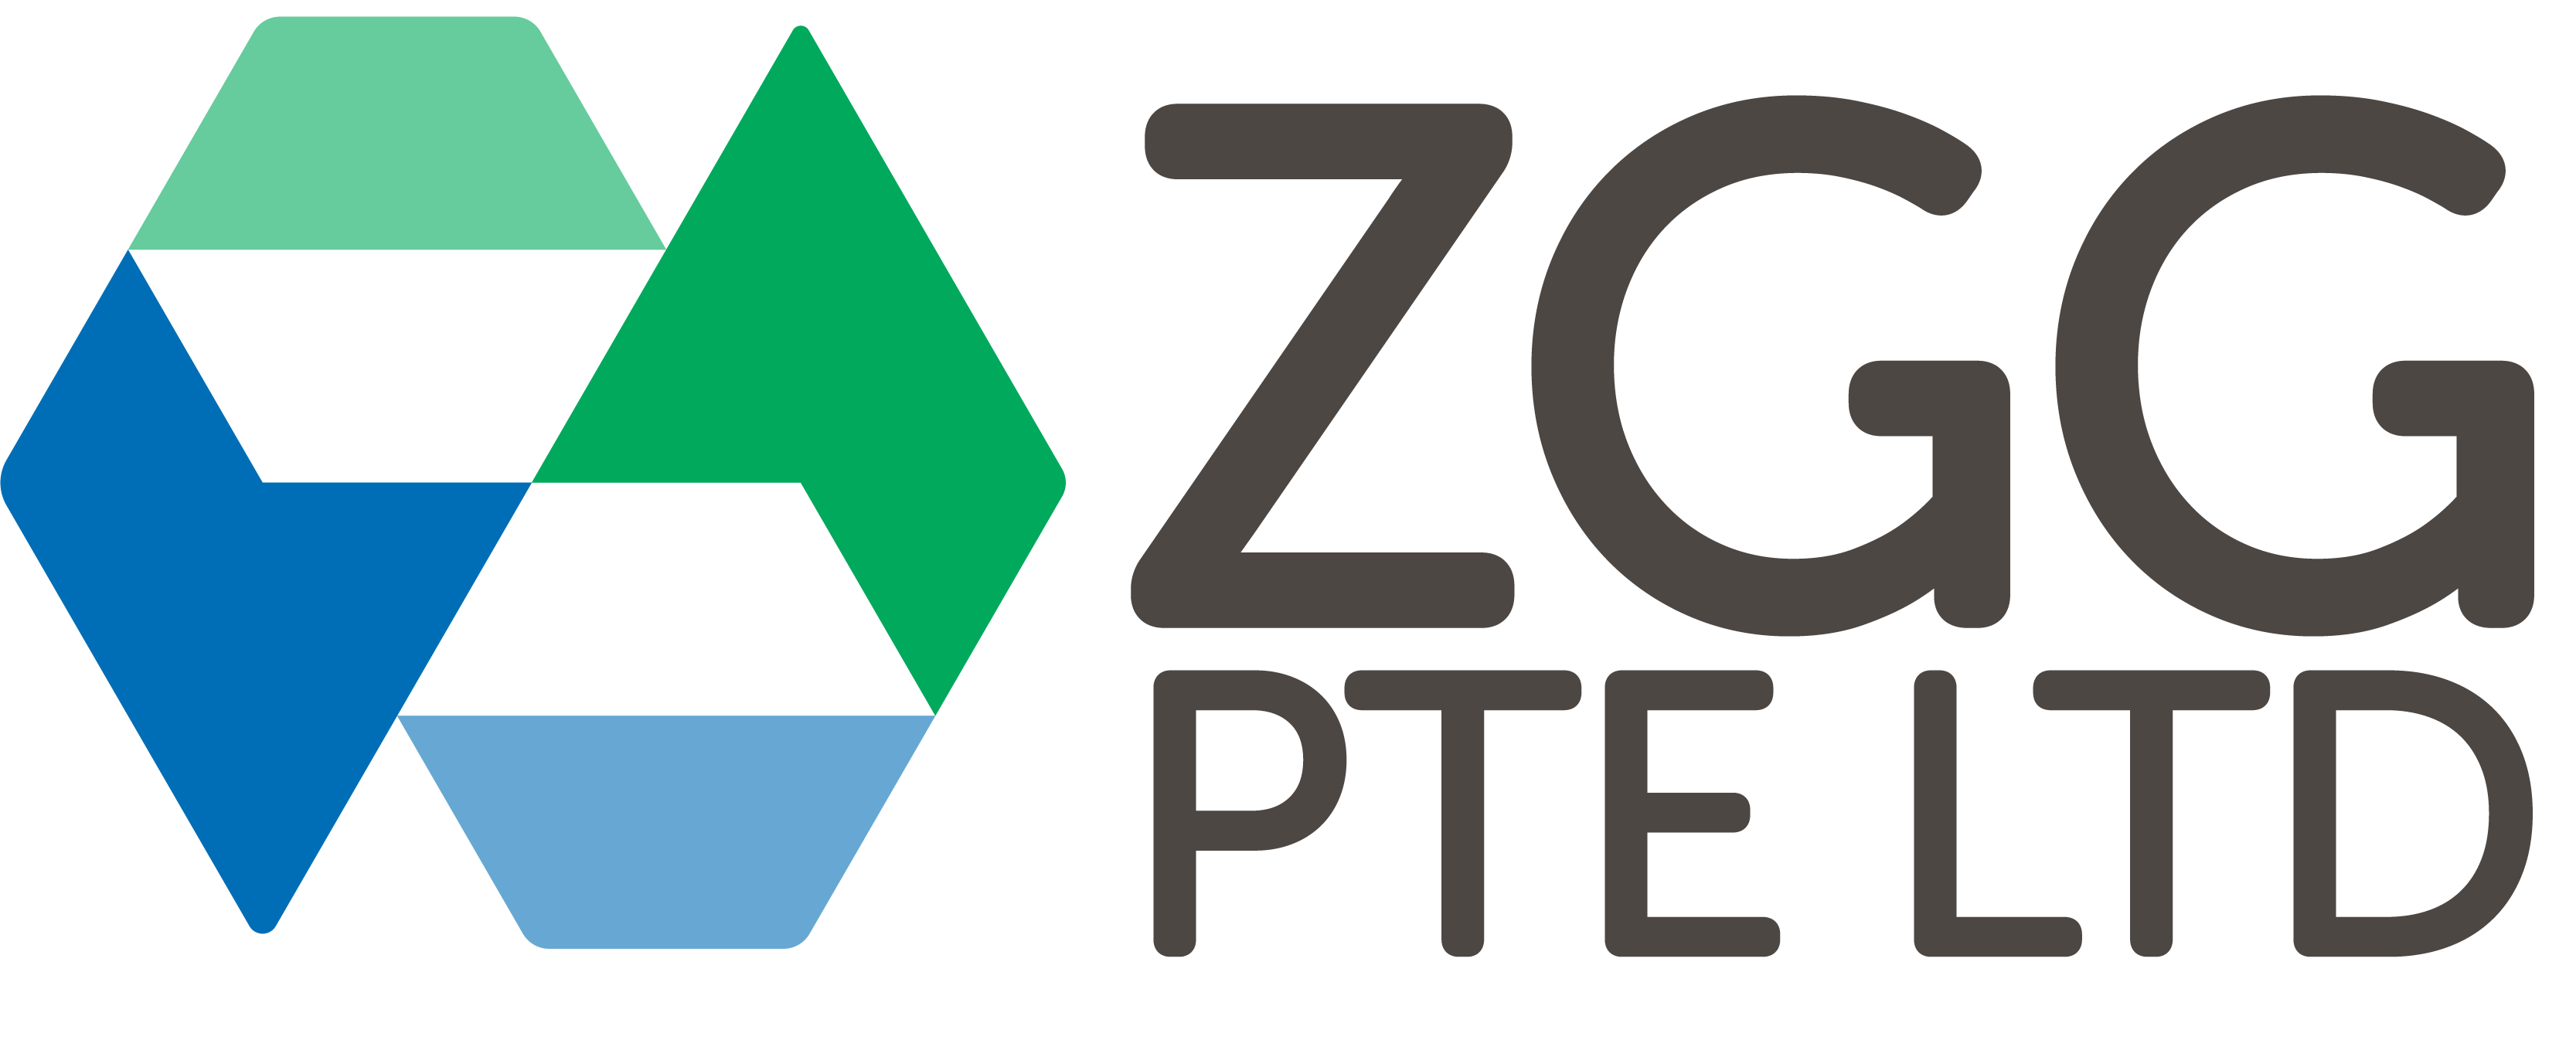 Zgg Pte. Ltd. company logo